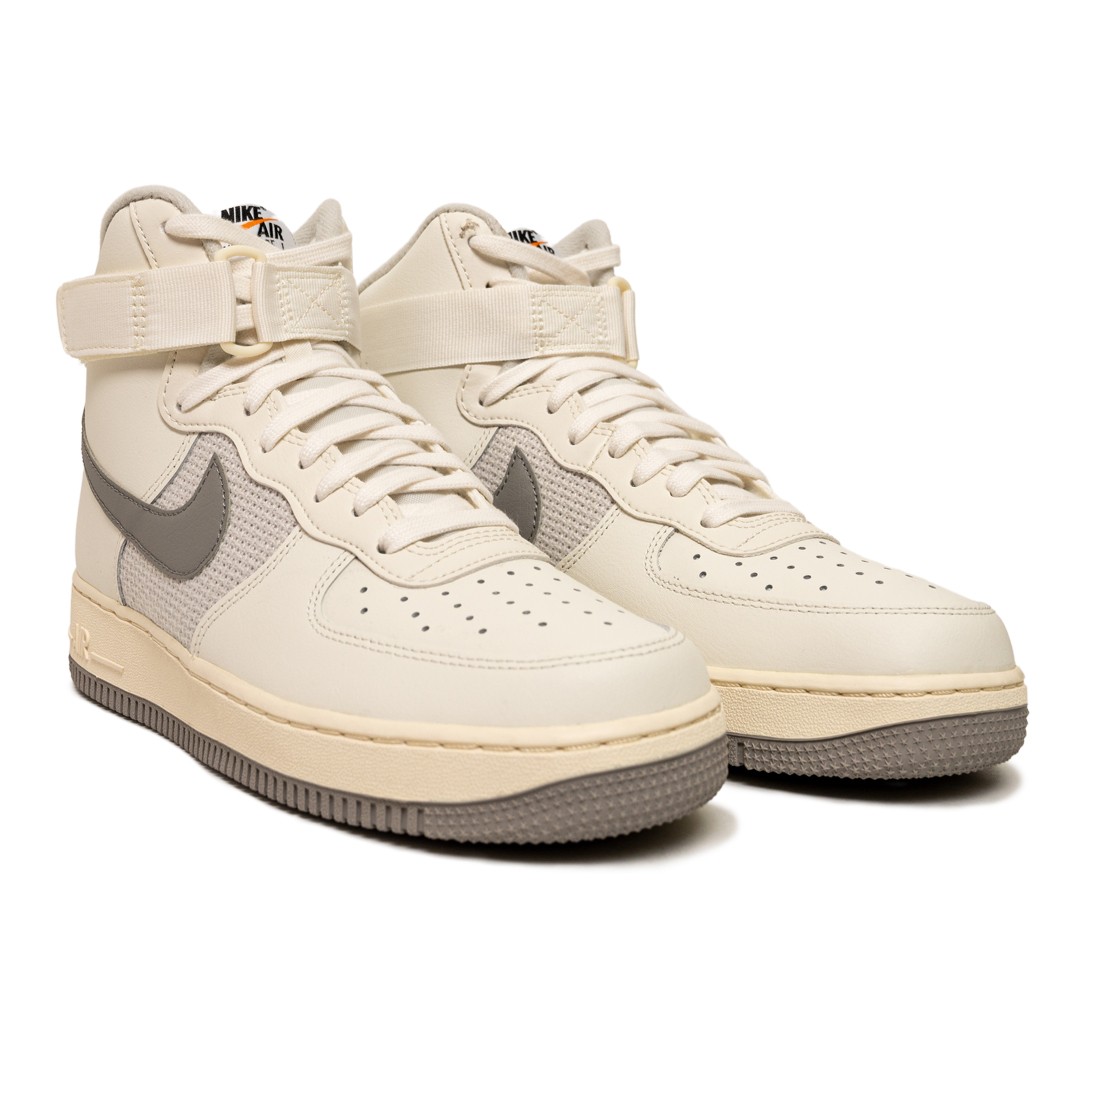 Nike Air Force 1 High '07 LV8 Sail Grey DM0209-100 Mens Size 10 - 12  Shoes #35D